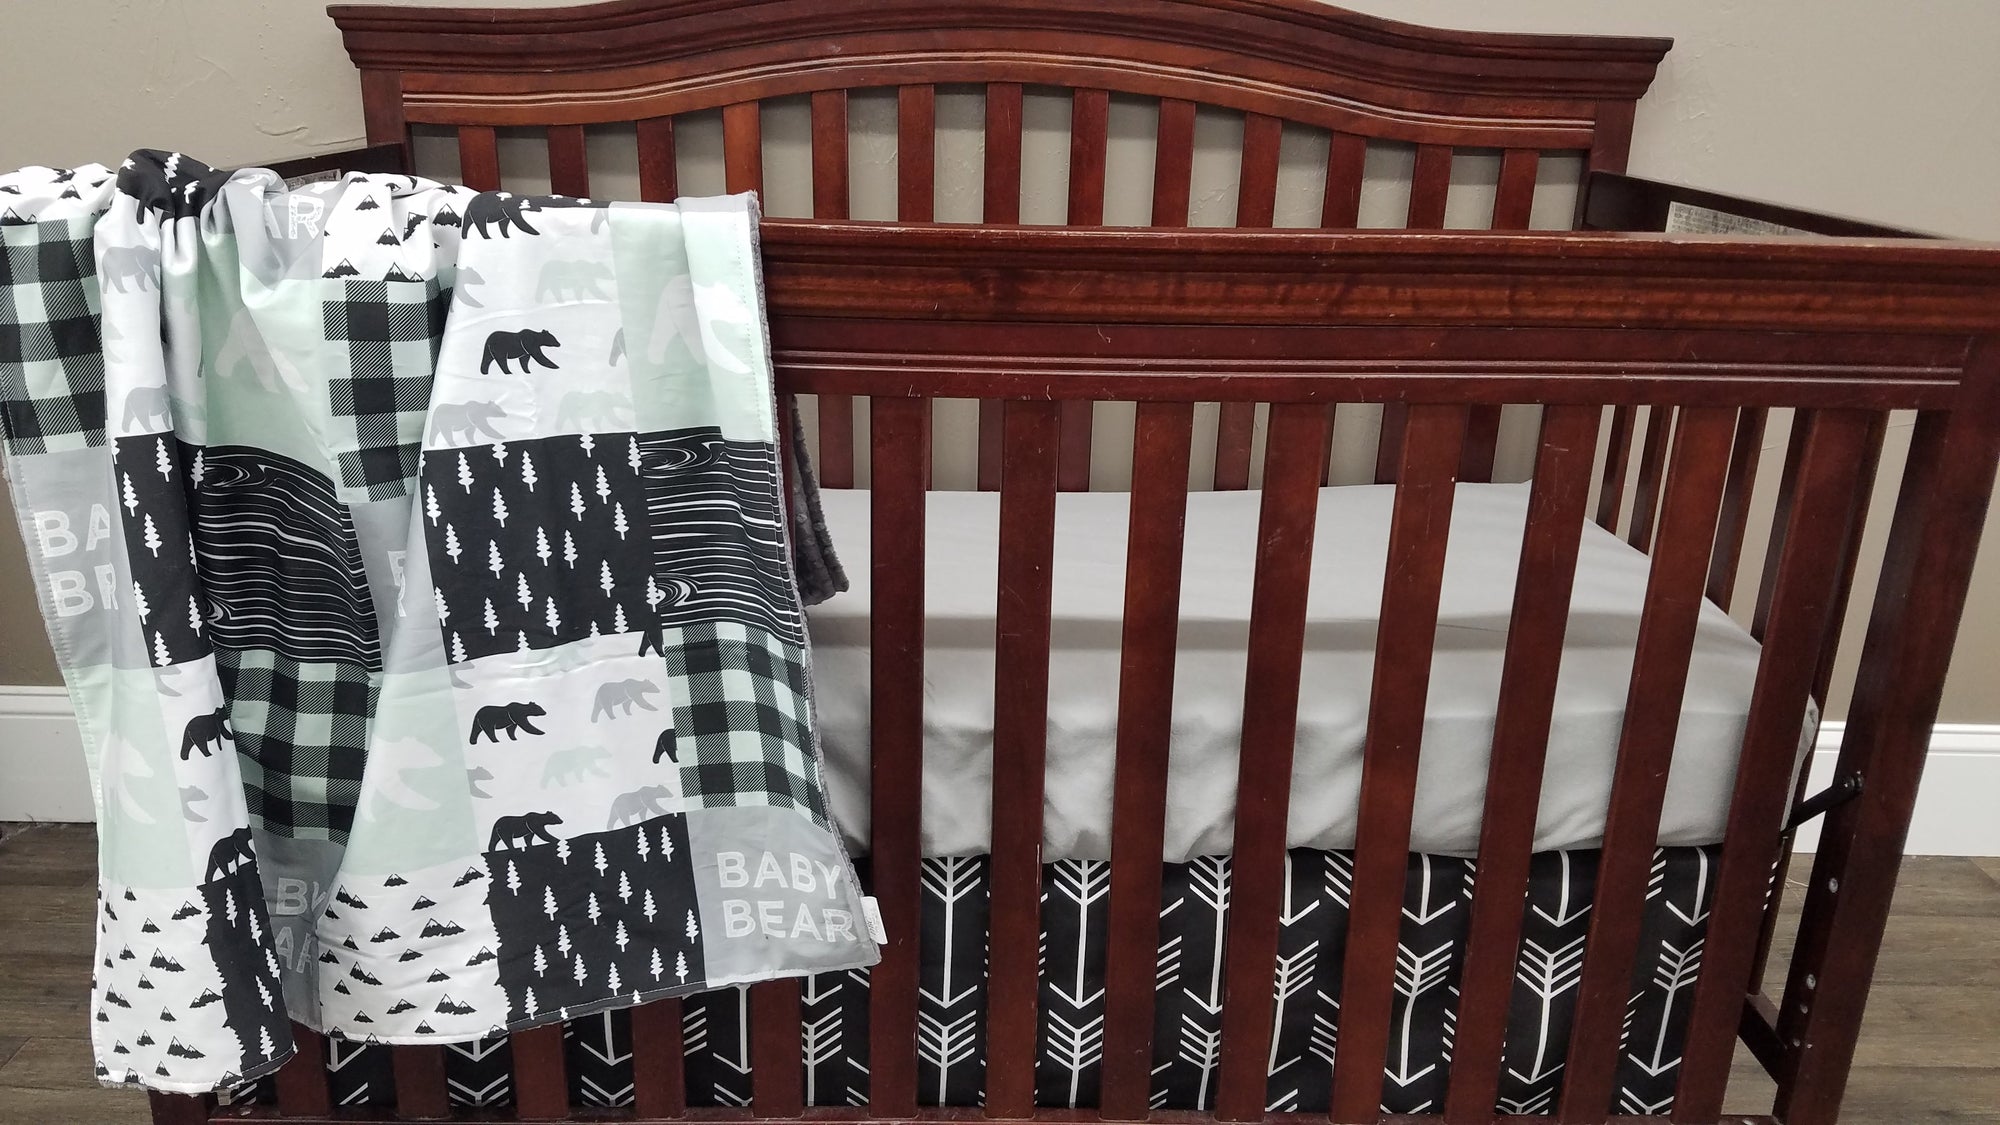 Boy Crib Bedding - Mint, Gray, Black Baby Bear Woodland Baby Bedding Collection - DBC Baby Bedding Co 